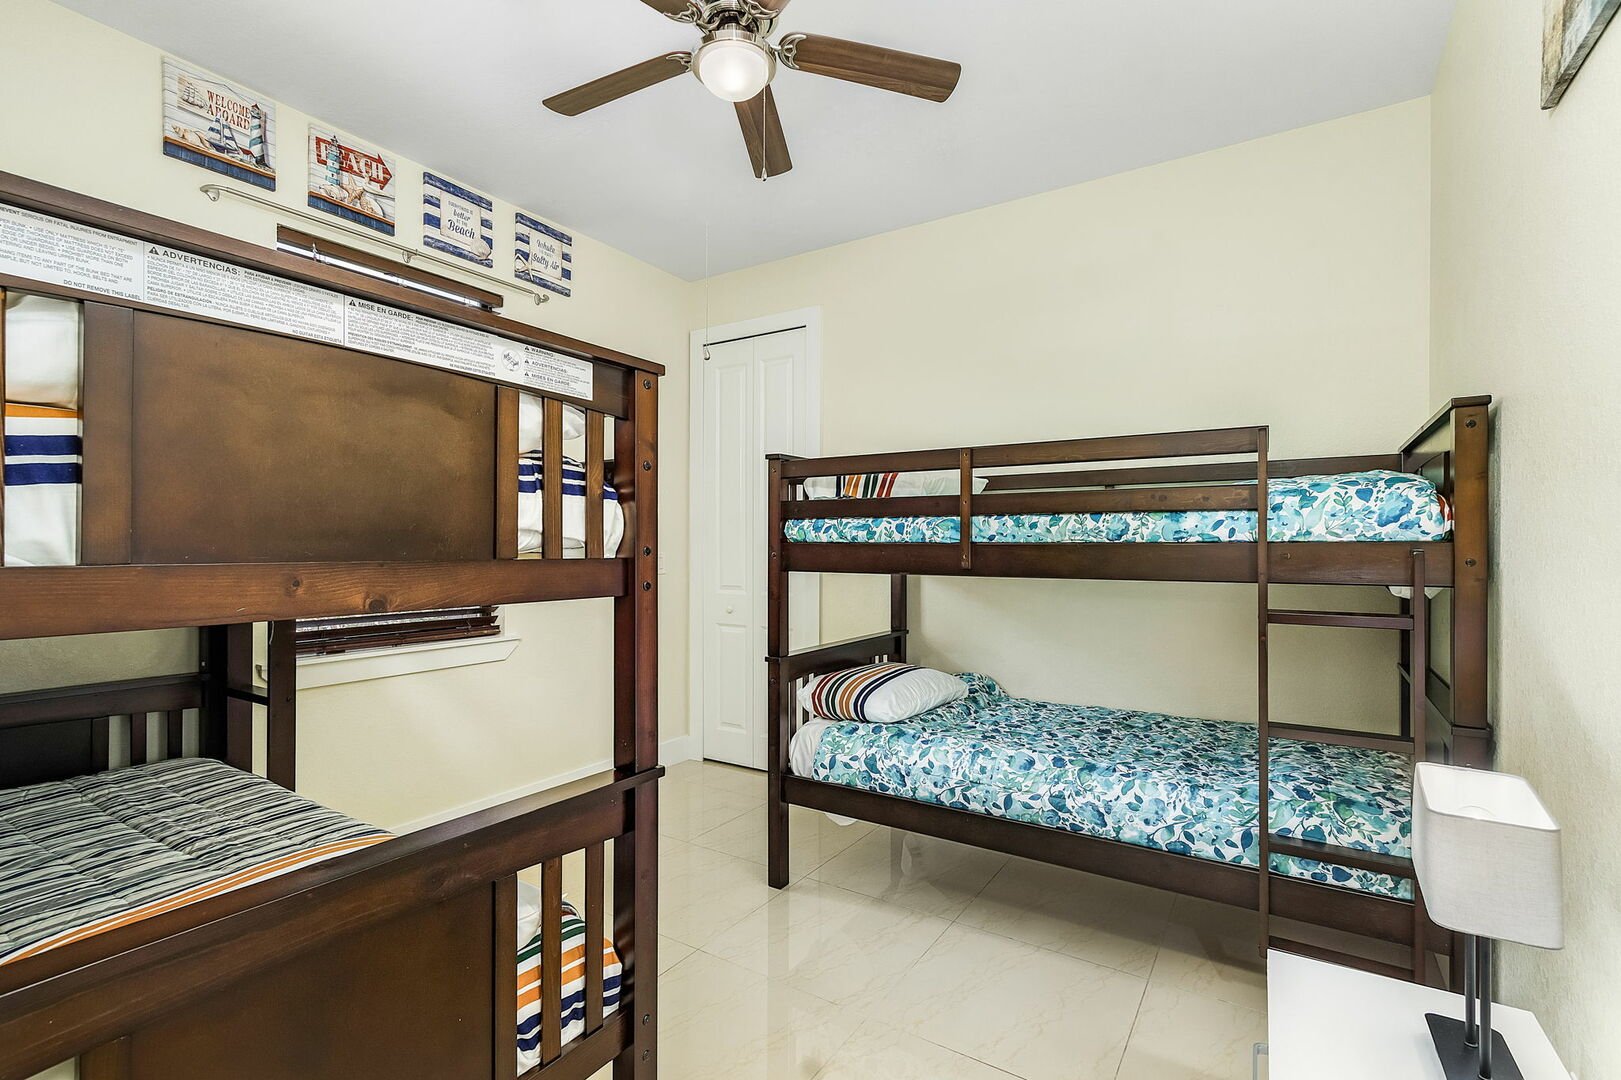 Guest bedroom with bunk beds